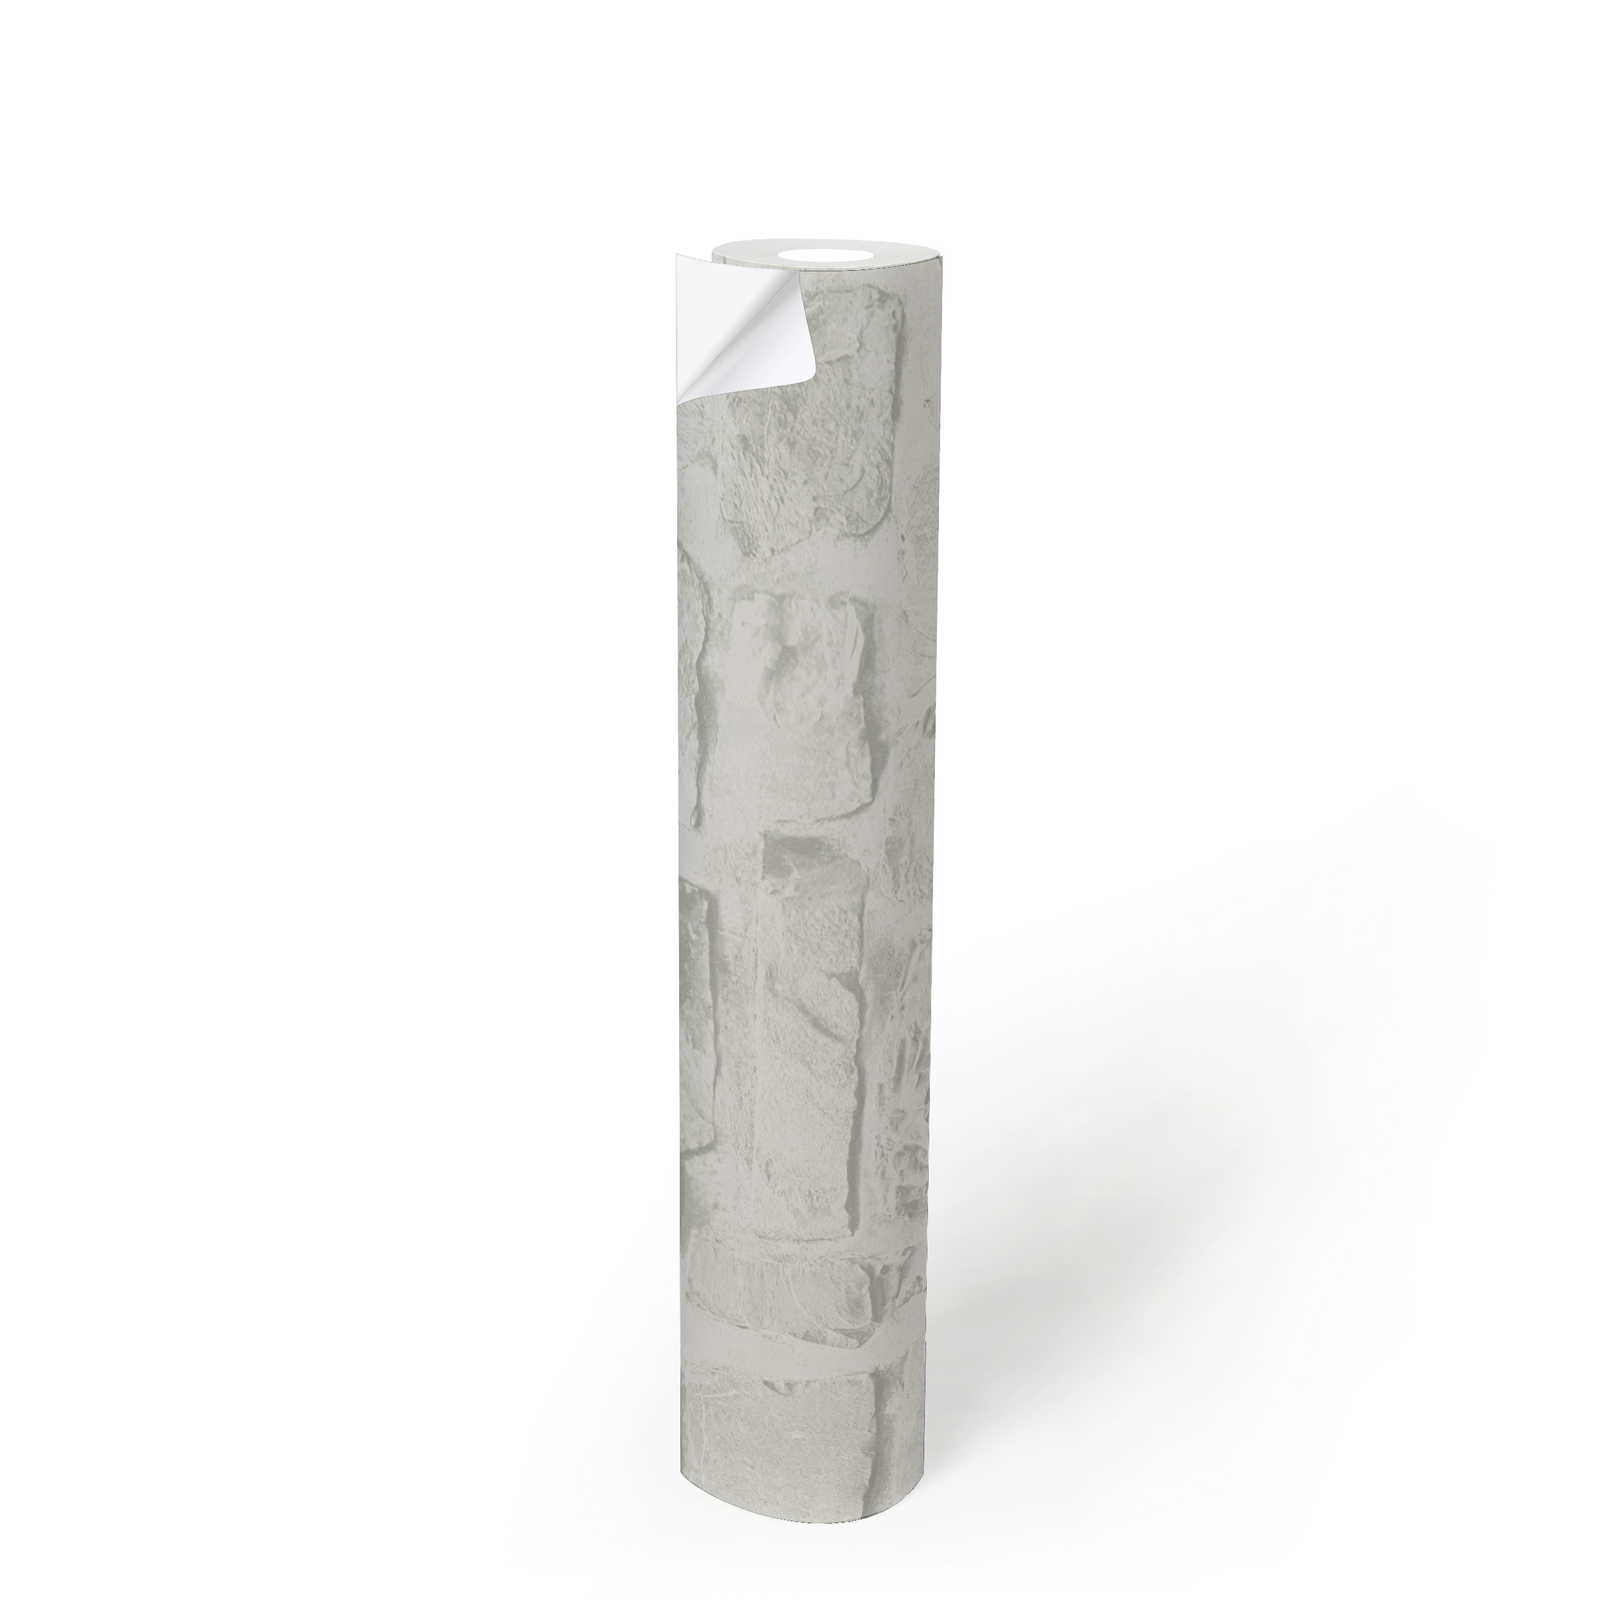             Selbstklebende Tapete | Weiße Steinoptik mit 3D Optik – Weiß, Grau
        